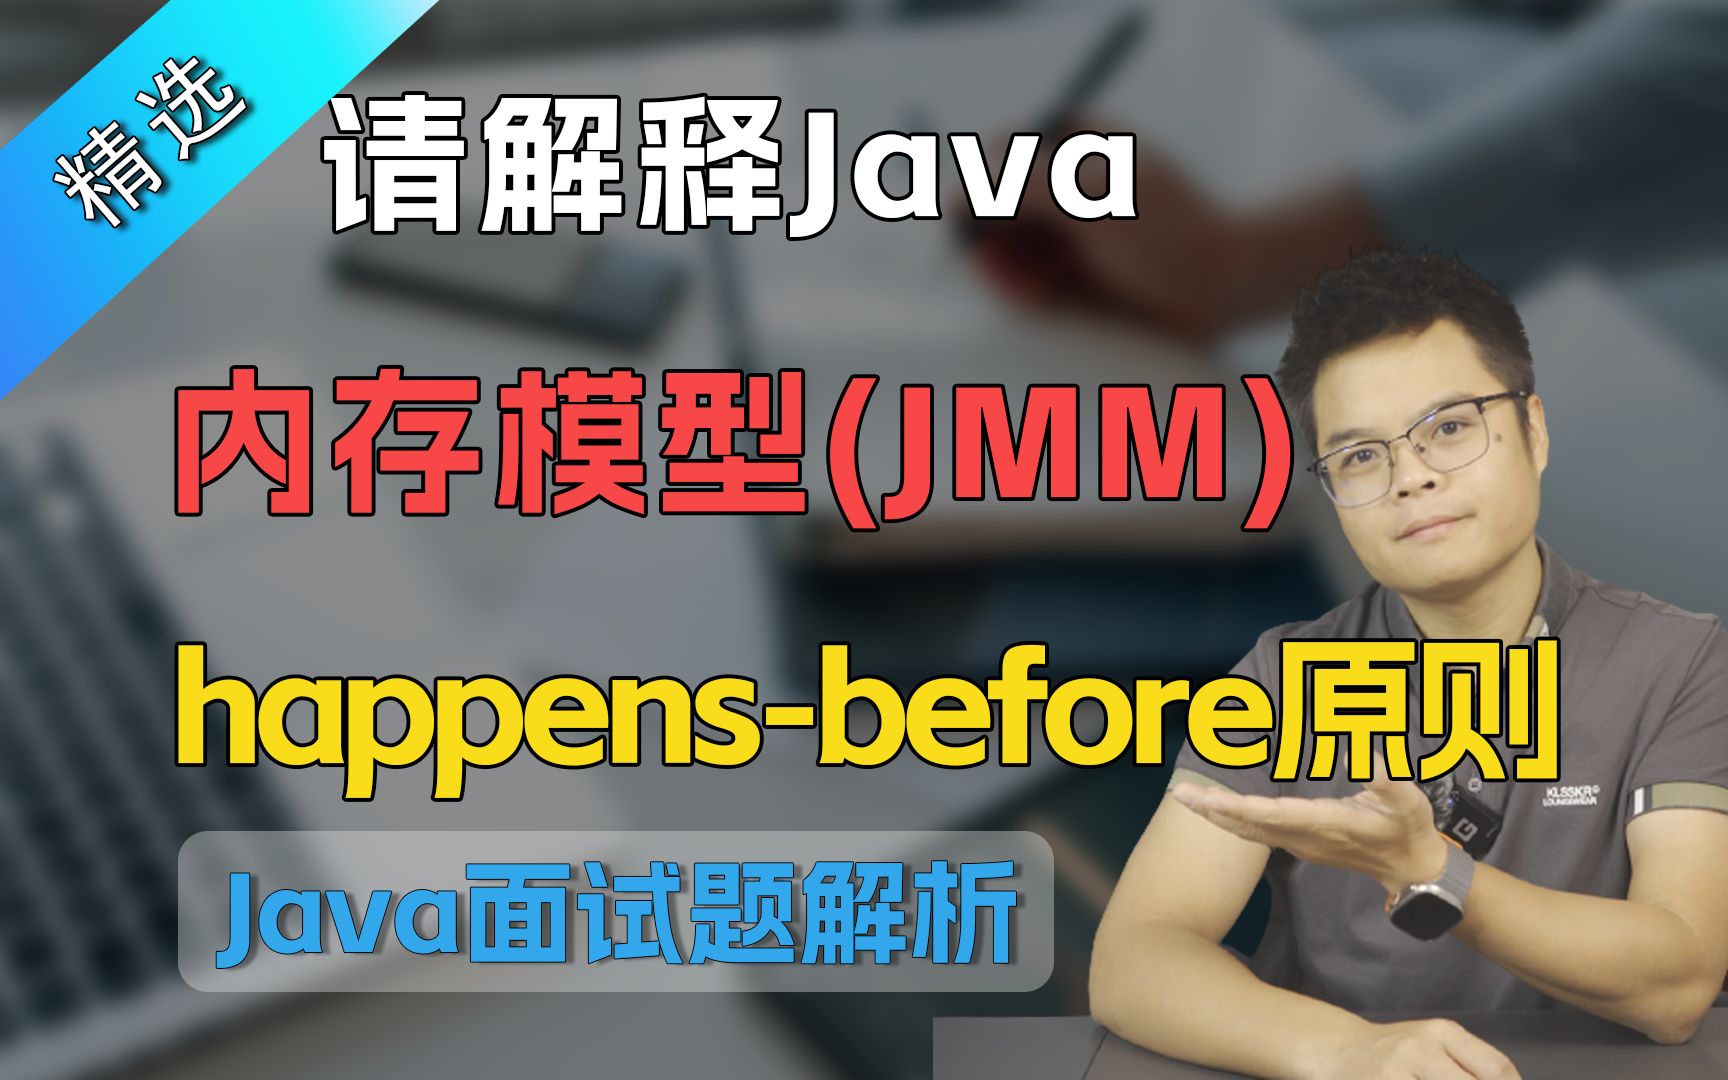 【Java面试】请解释Java内存模型（JMM）以及happens-before原则